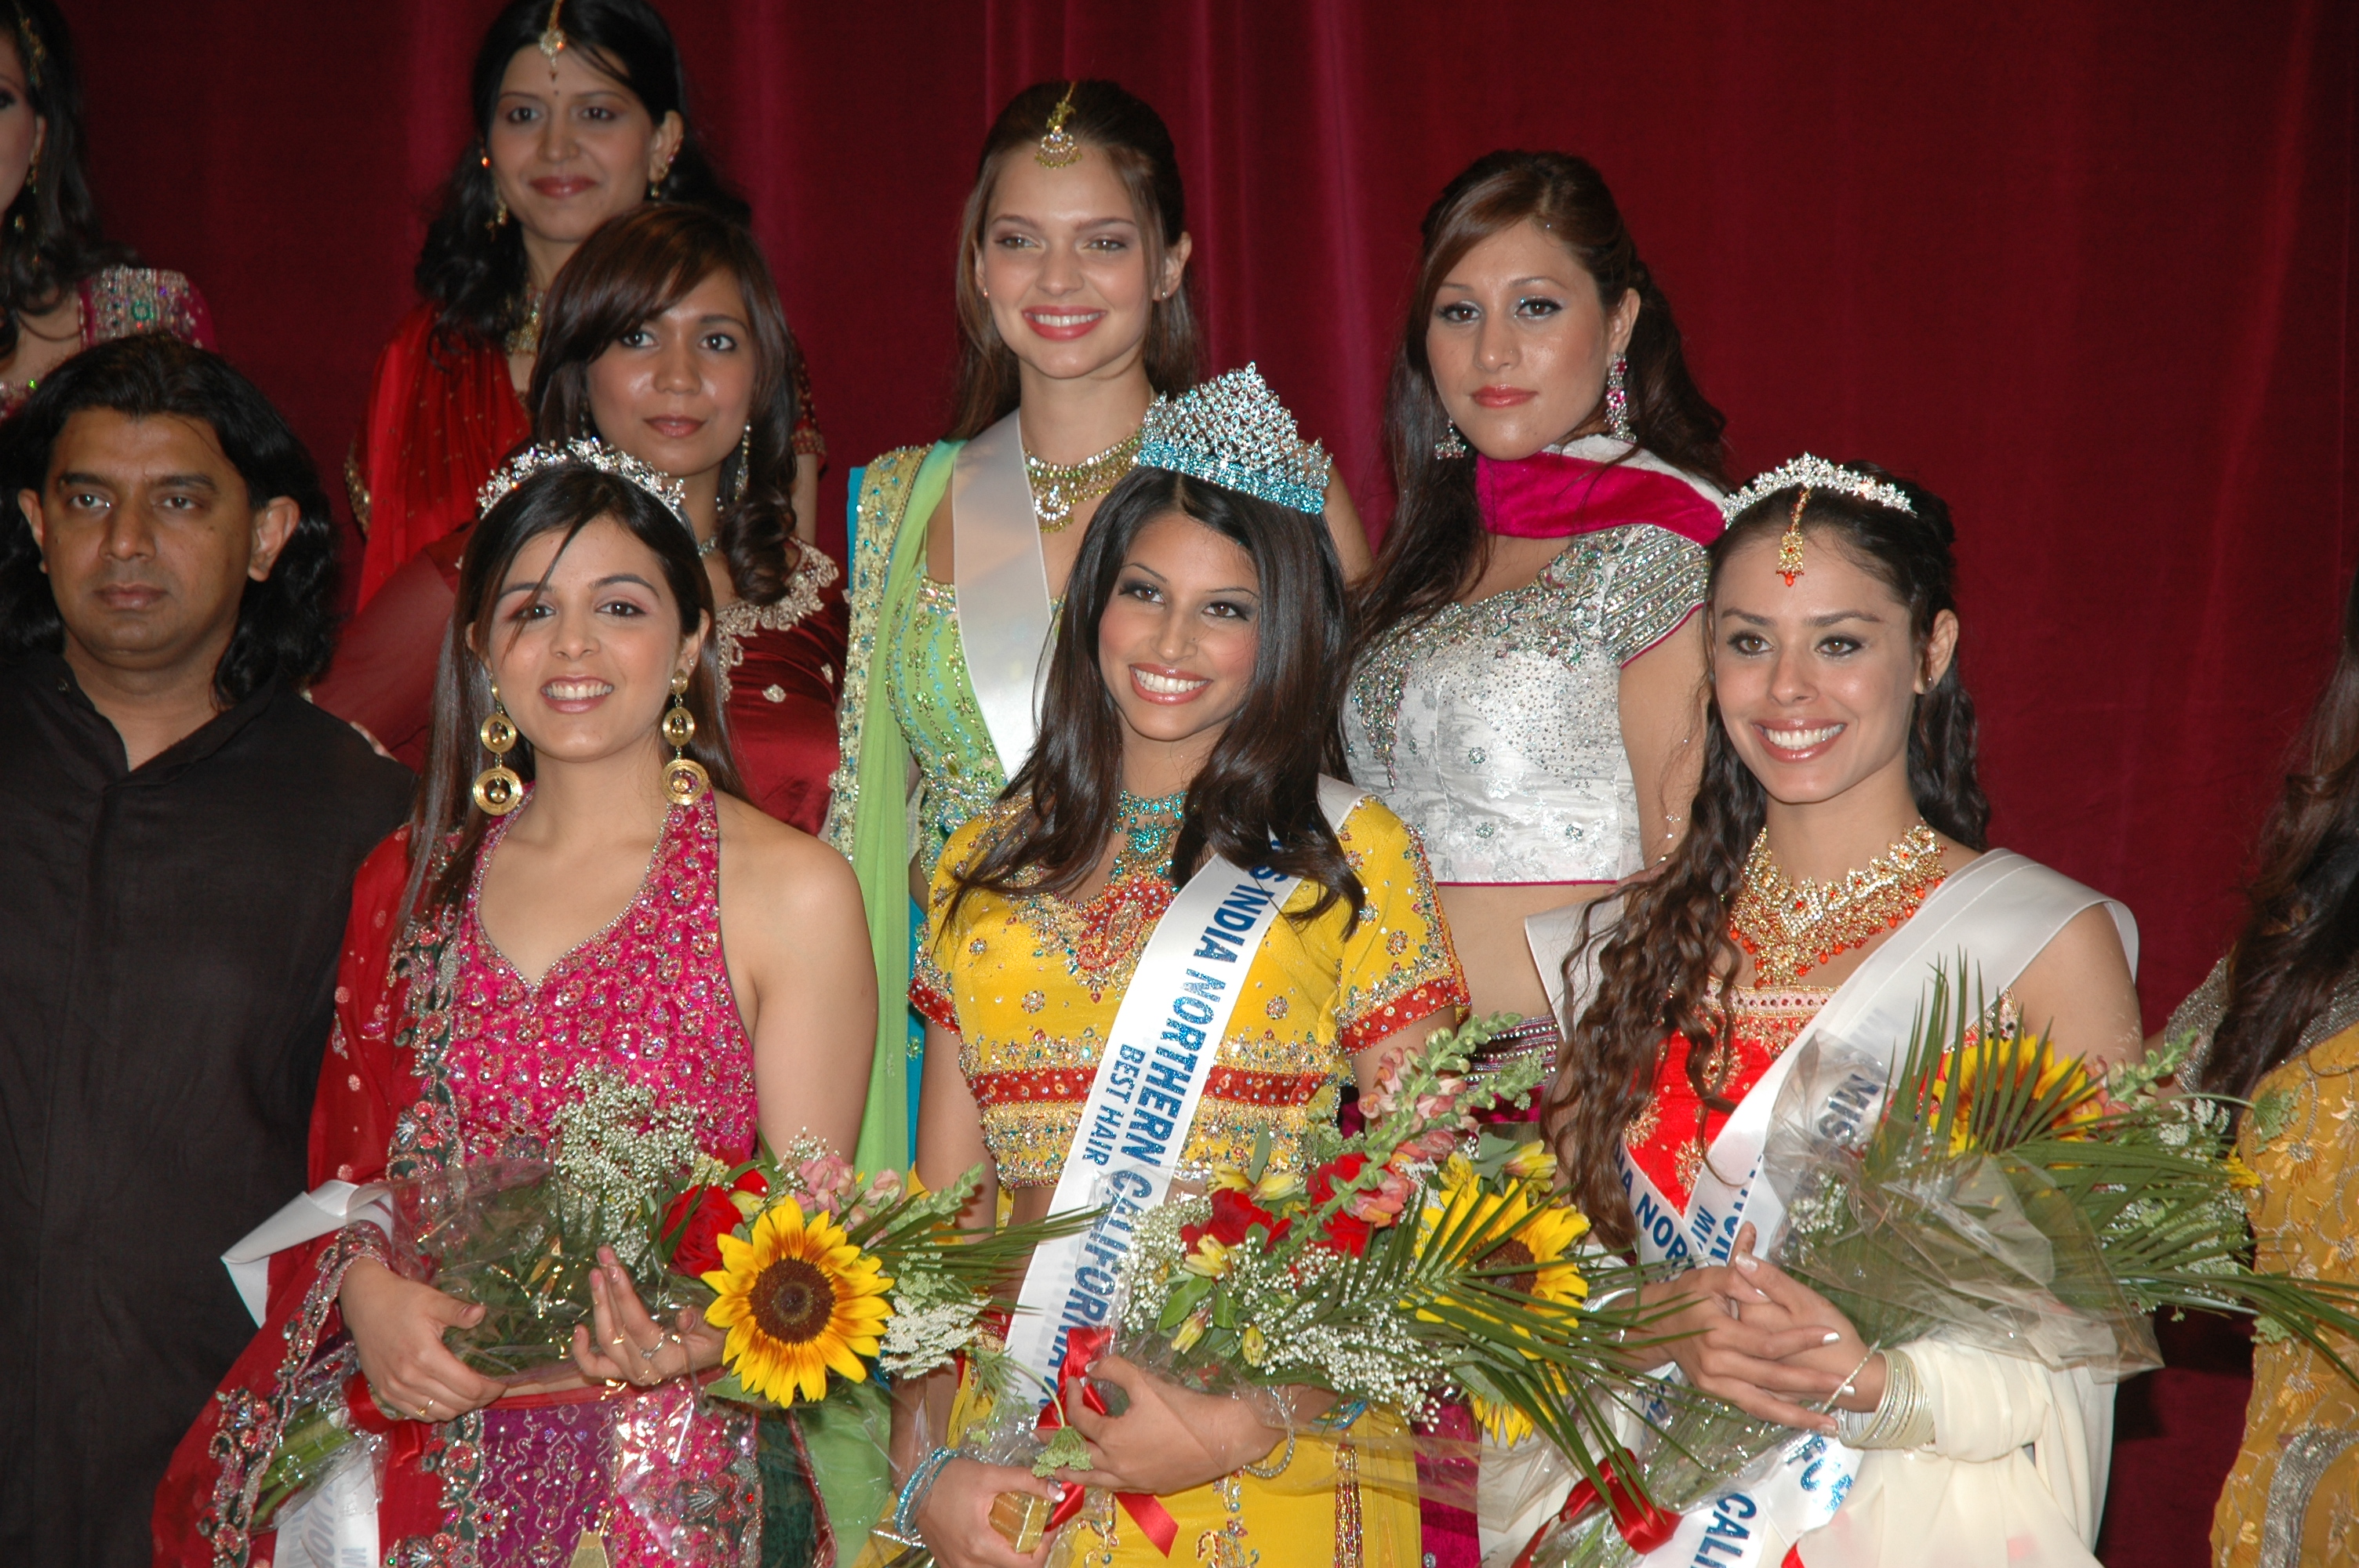 Miss India Northern California 2008